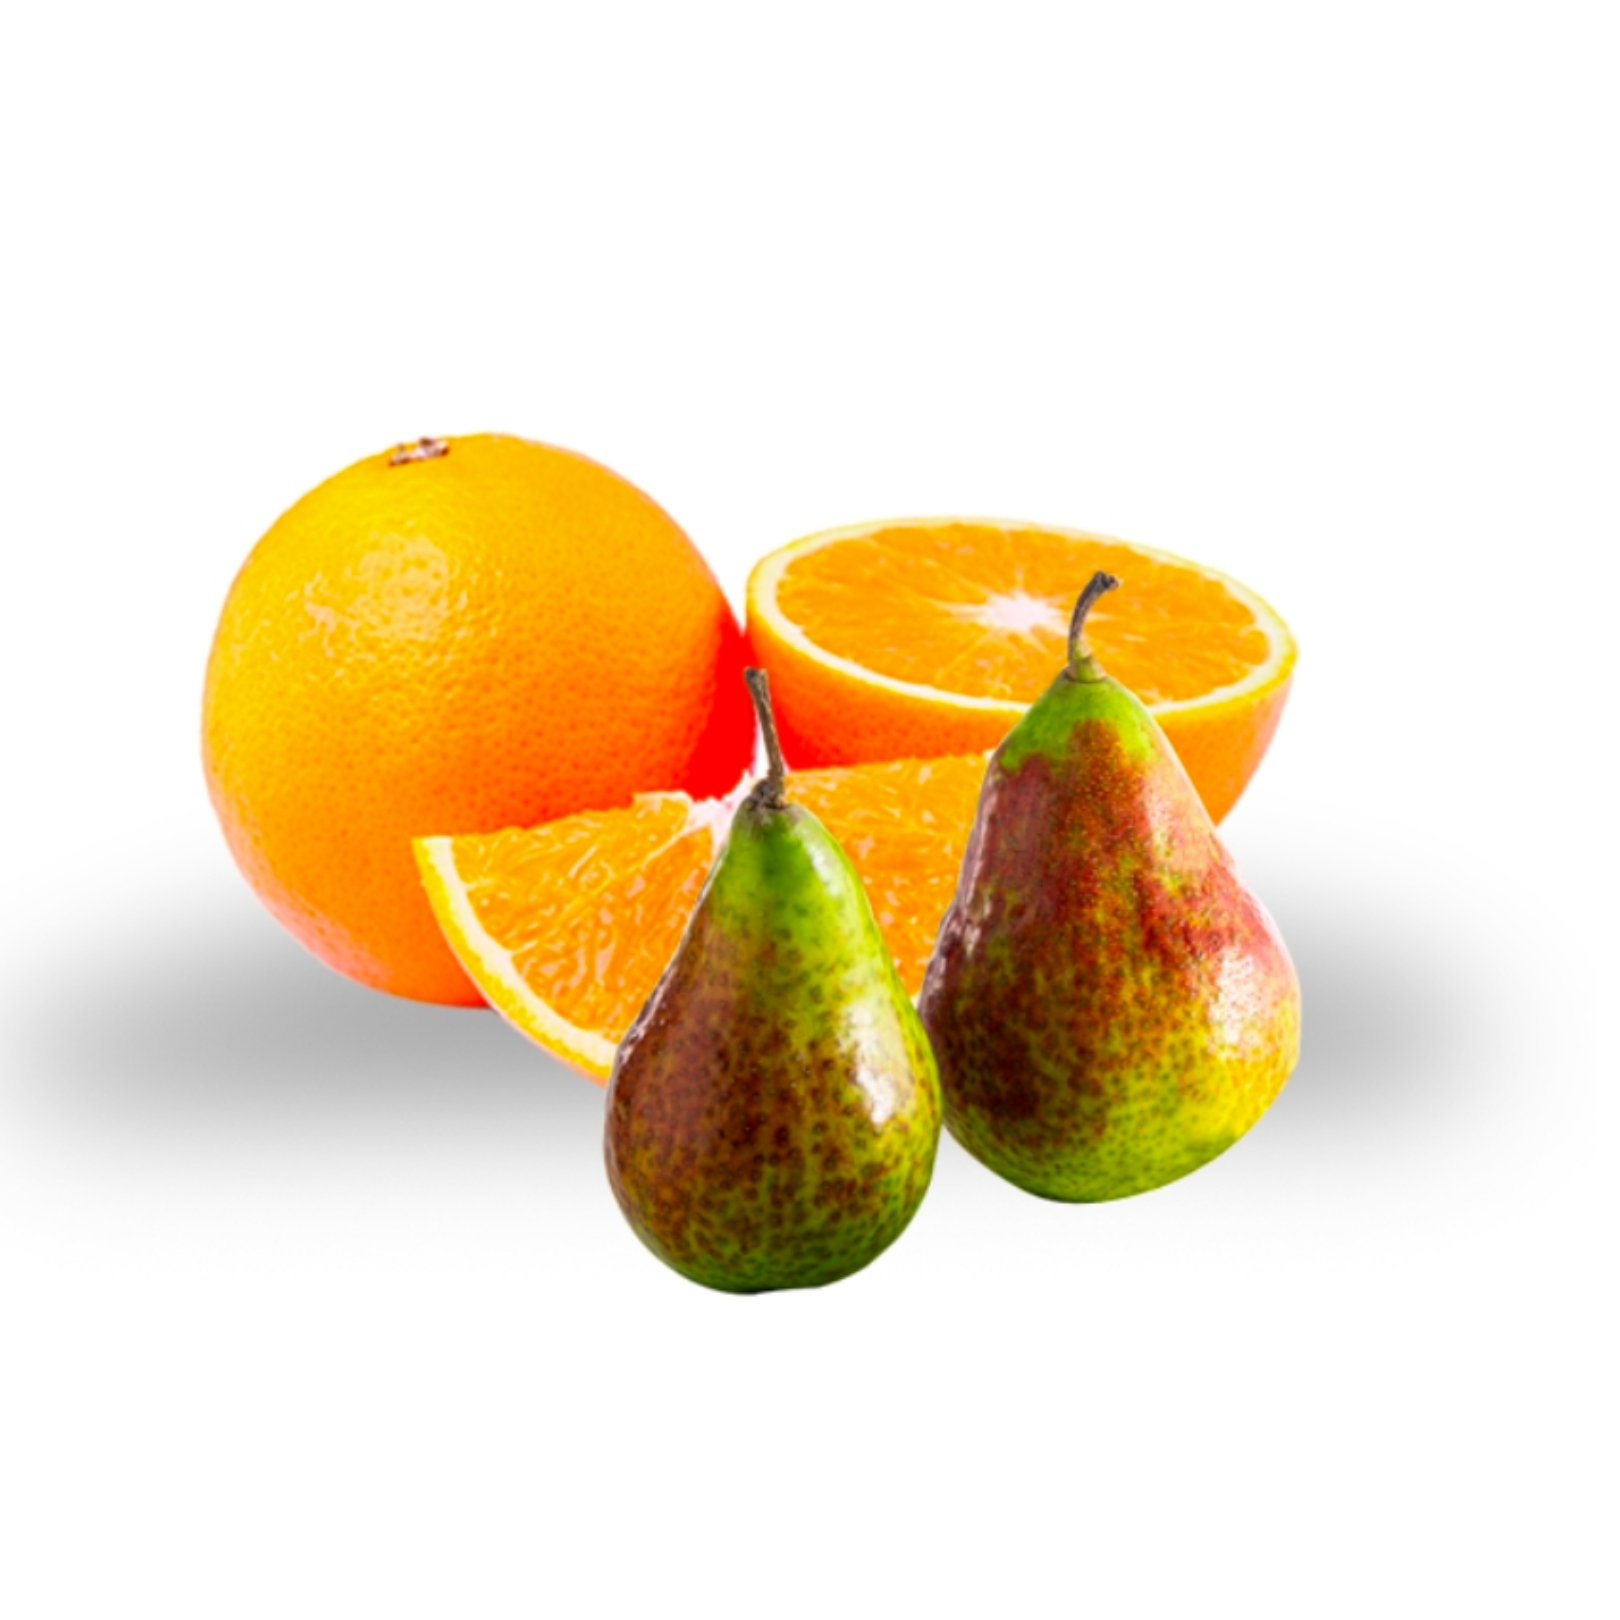 Buy Orange Pear Online NZ - Twisted Citrus